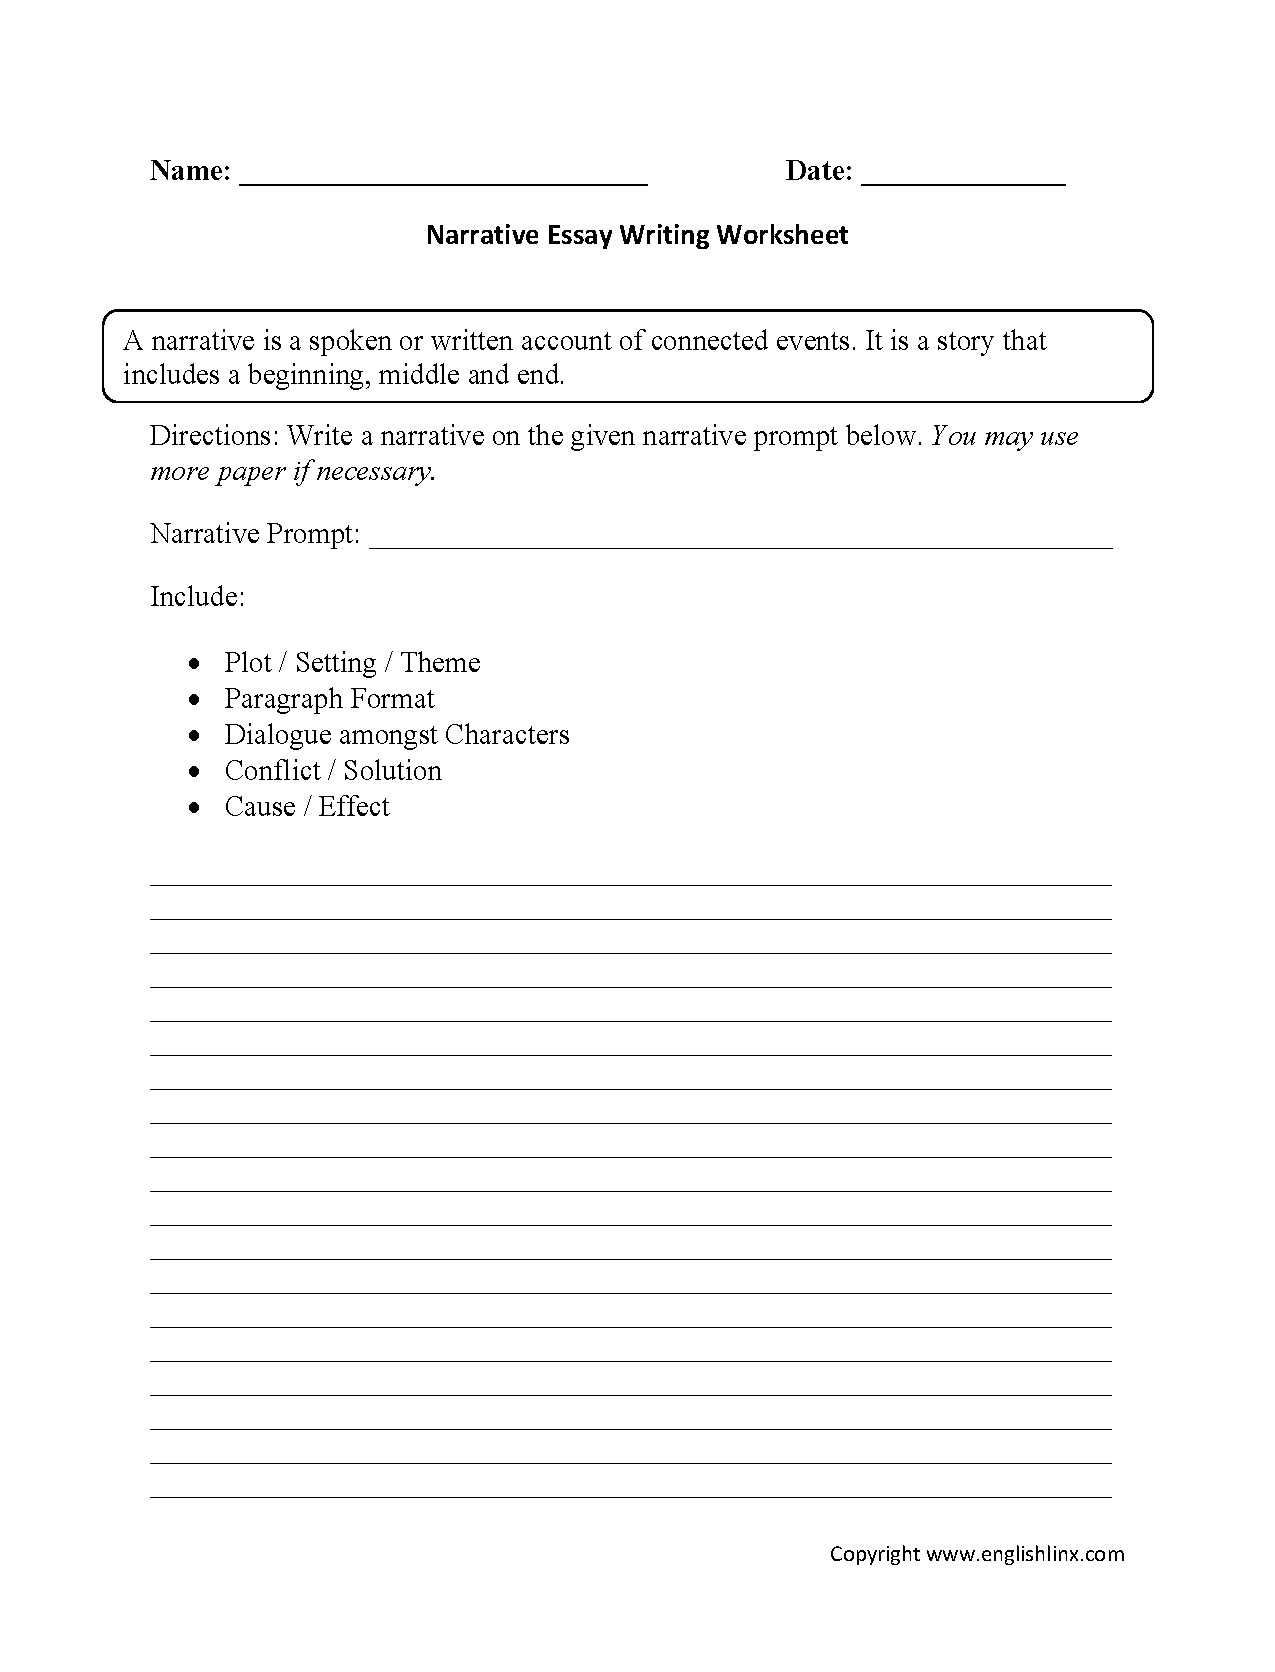 Writing Worksheets Essay Writing Worksheets Writing Worksheets 